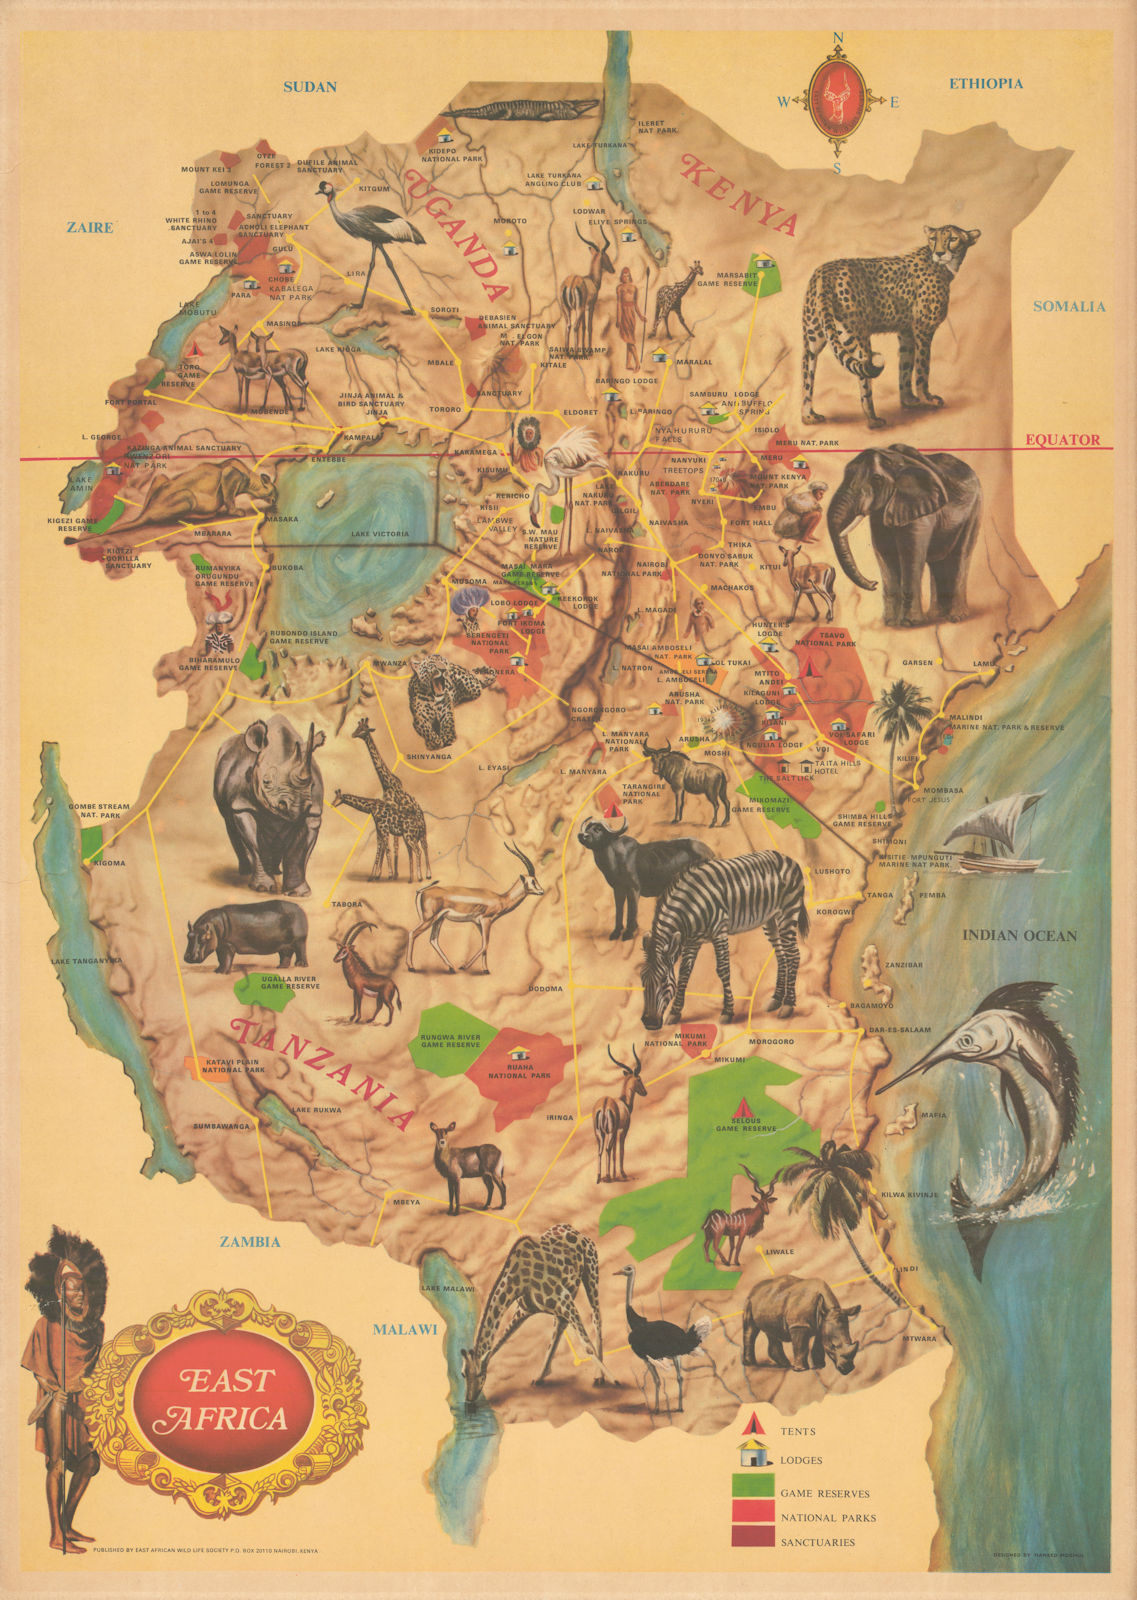 East Africa safari map. Game Reserves National Parks. Uganda Kenya Tanzania 1971